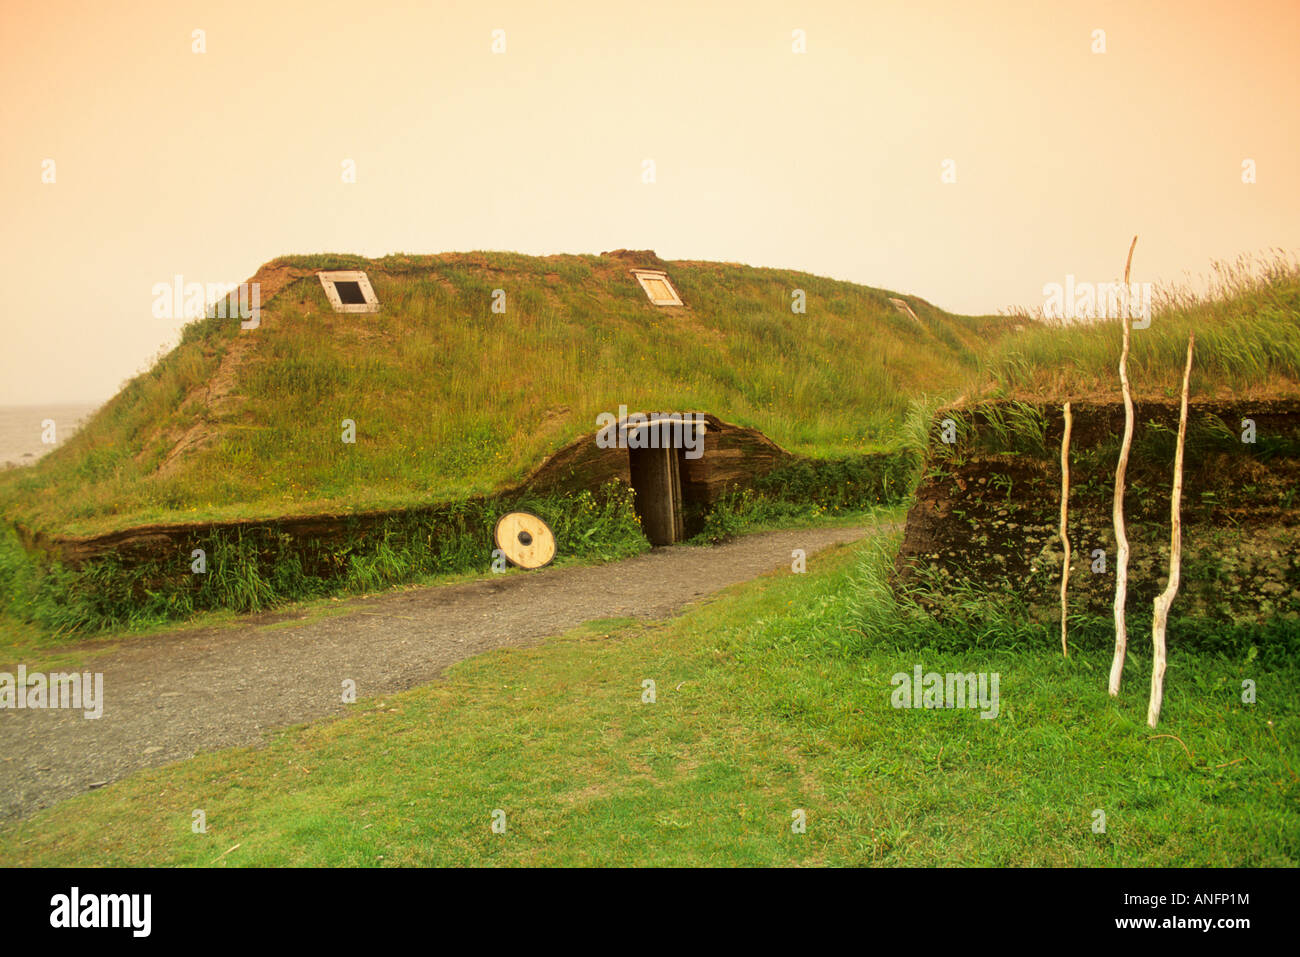 L'Anse-aux-Meadows, National Historic Site, UNESCO site, Newfoundland and Labrador, Canada. Stock Photo